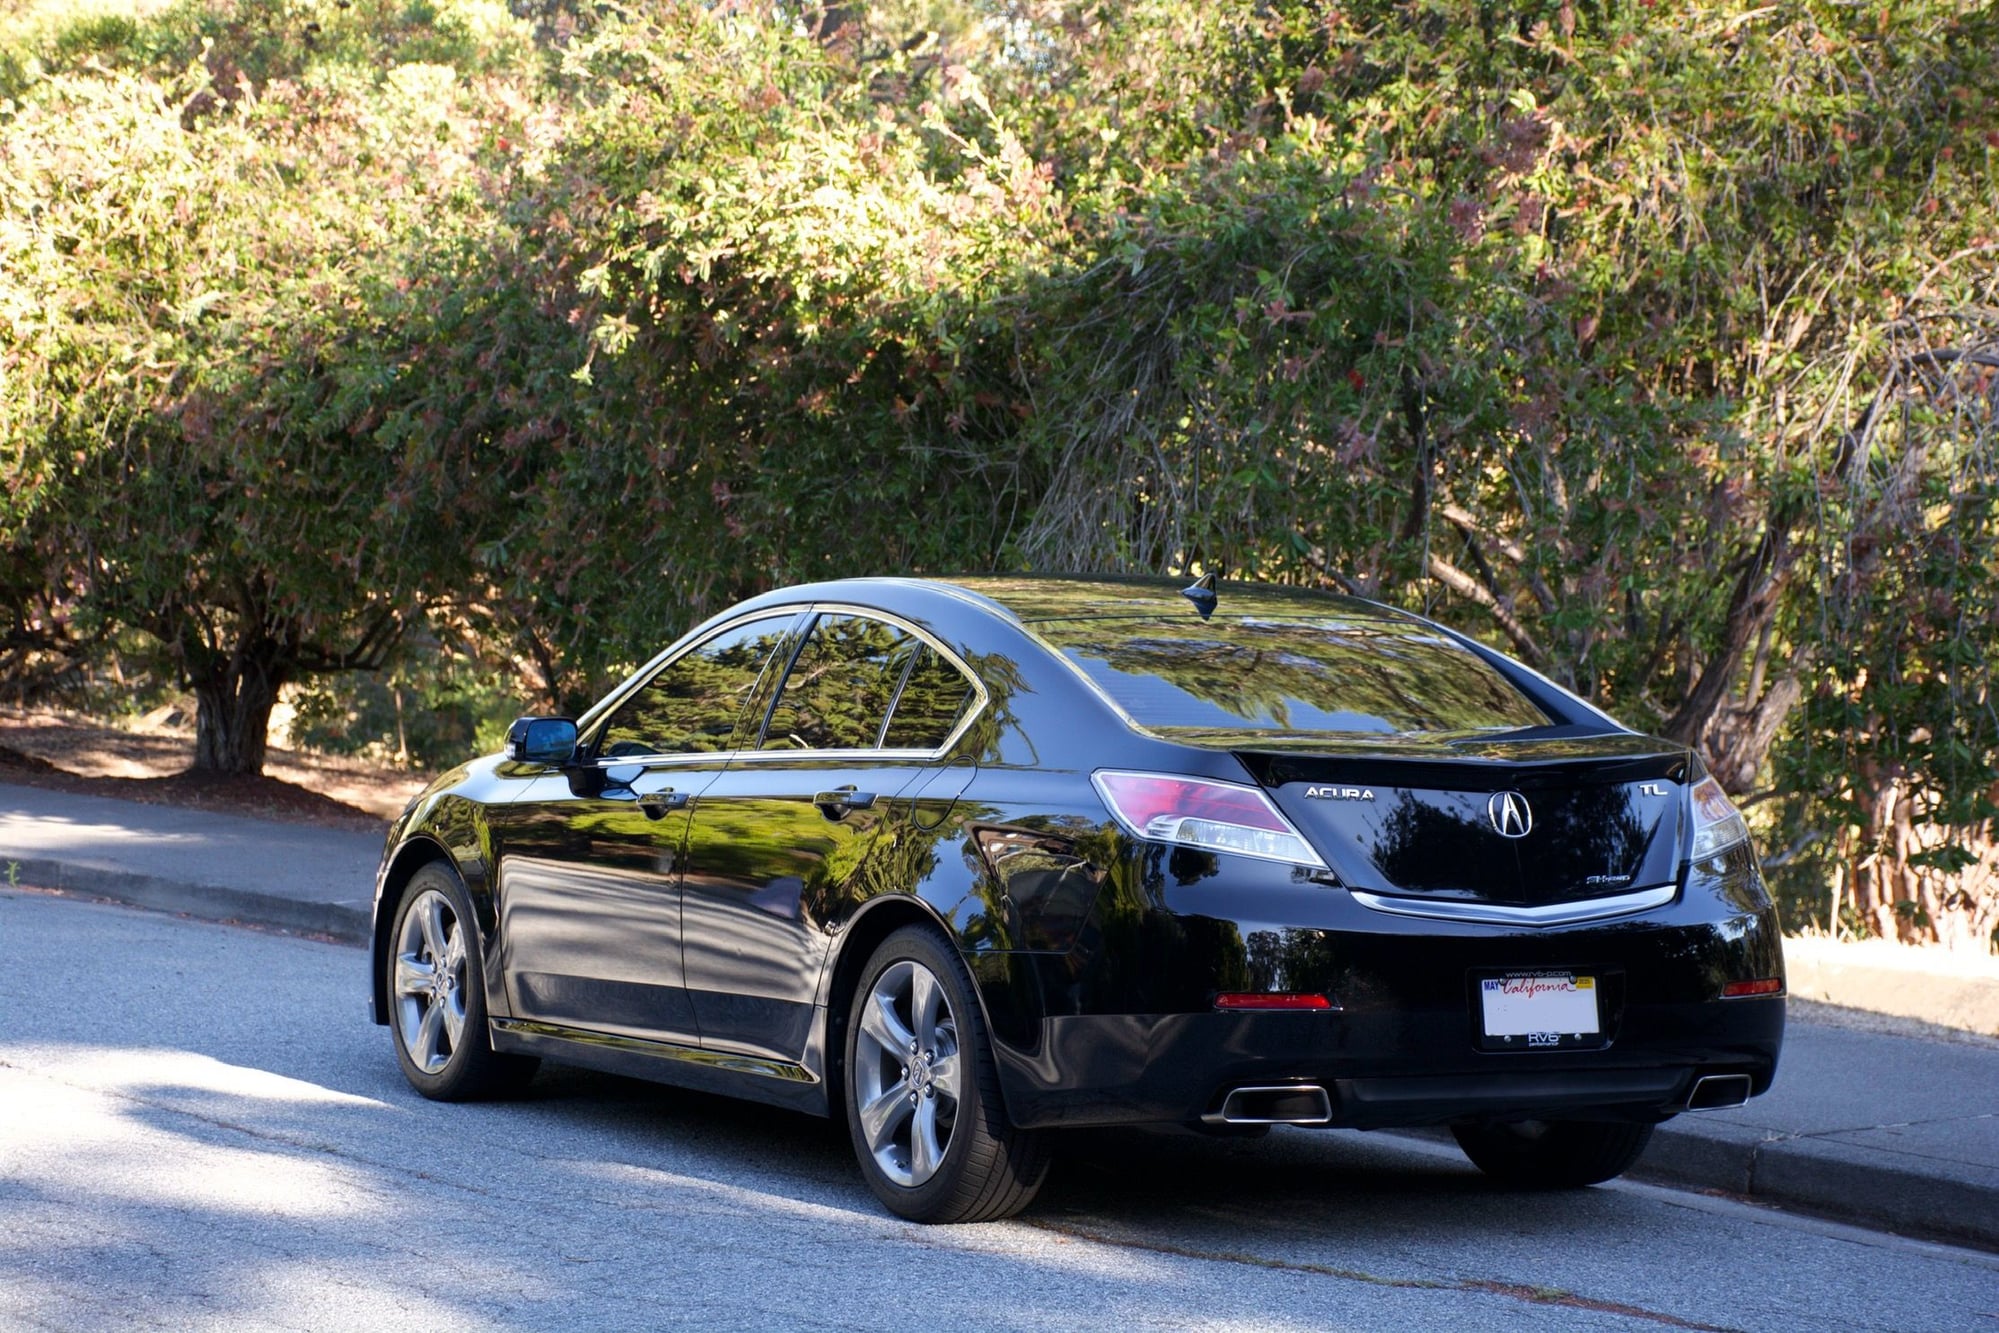 2012 Acura TL - FS: 2012 Acura TL SH-AWD 6MT - Used - VIN 19UUA9E5XCA009201 - 80,093 Miles - 6 cyl - AWD - Manual - Sedan - Black - Daly City, CA 94015, United States